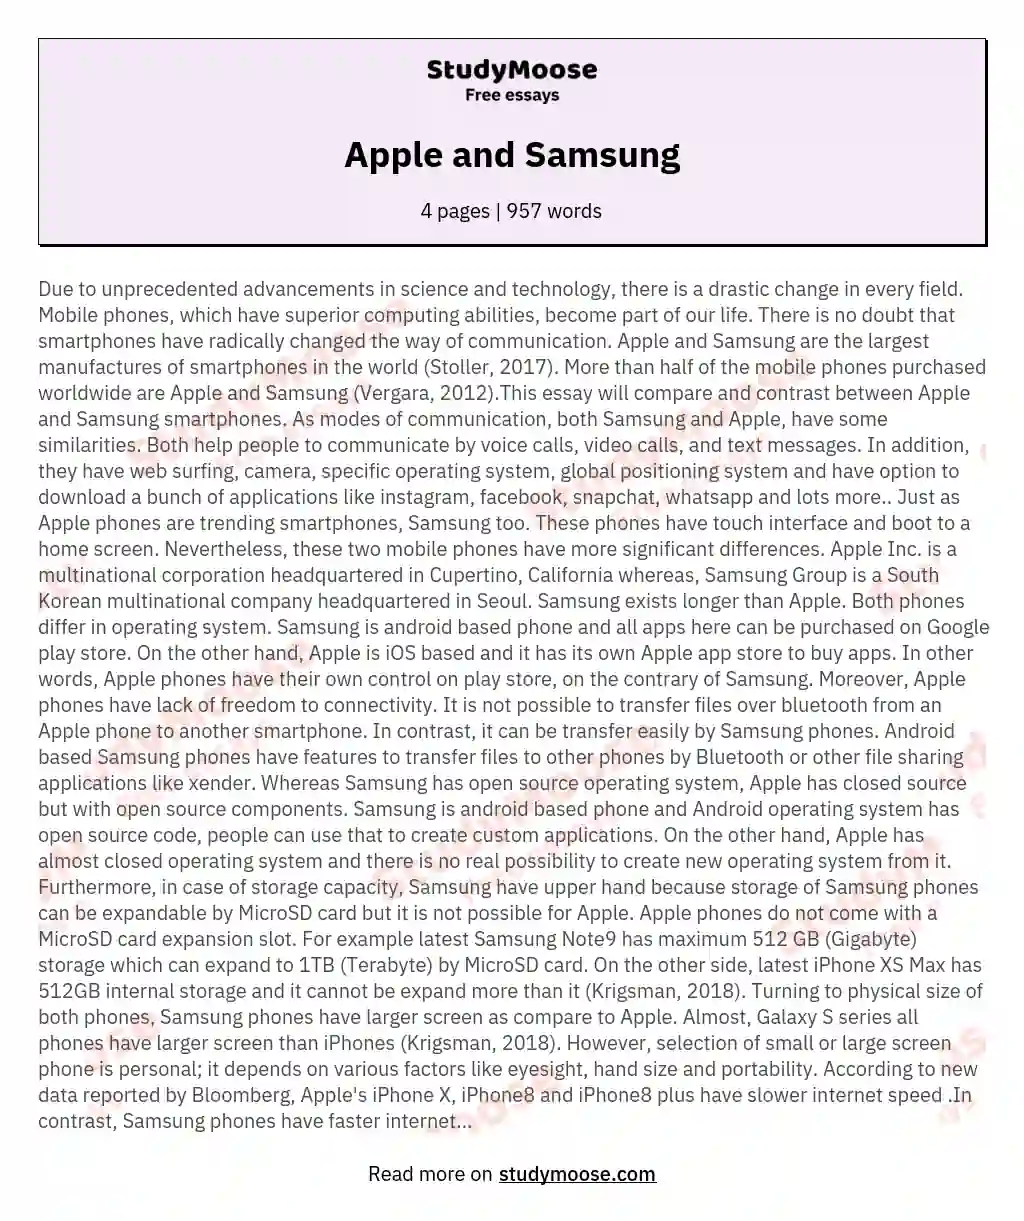 Apple and Samsung essay